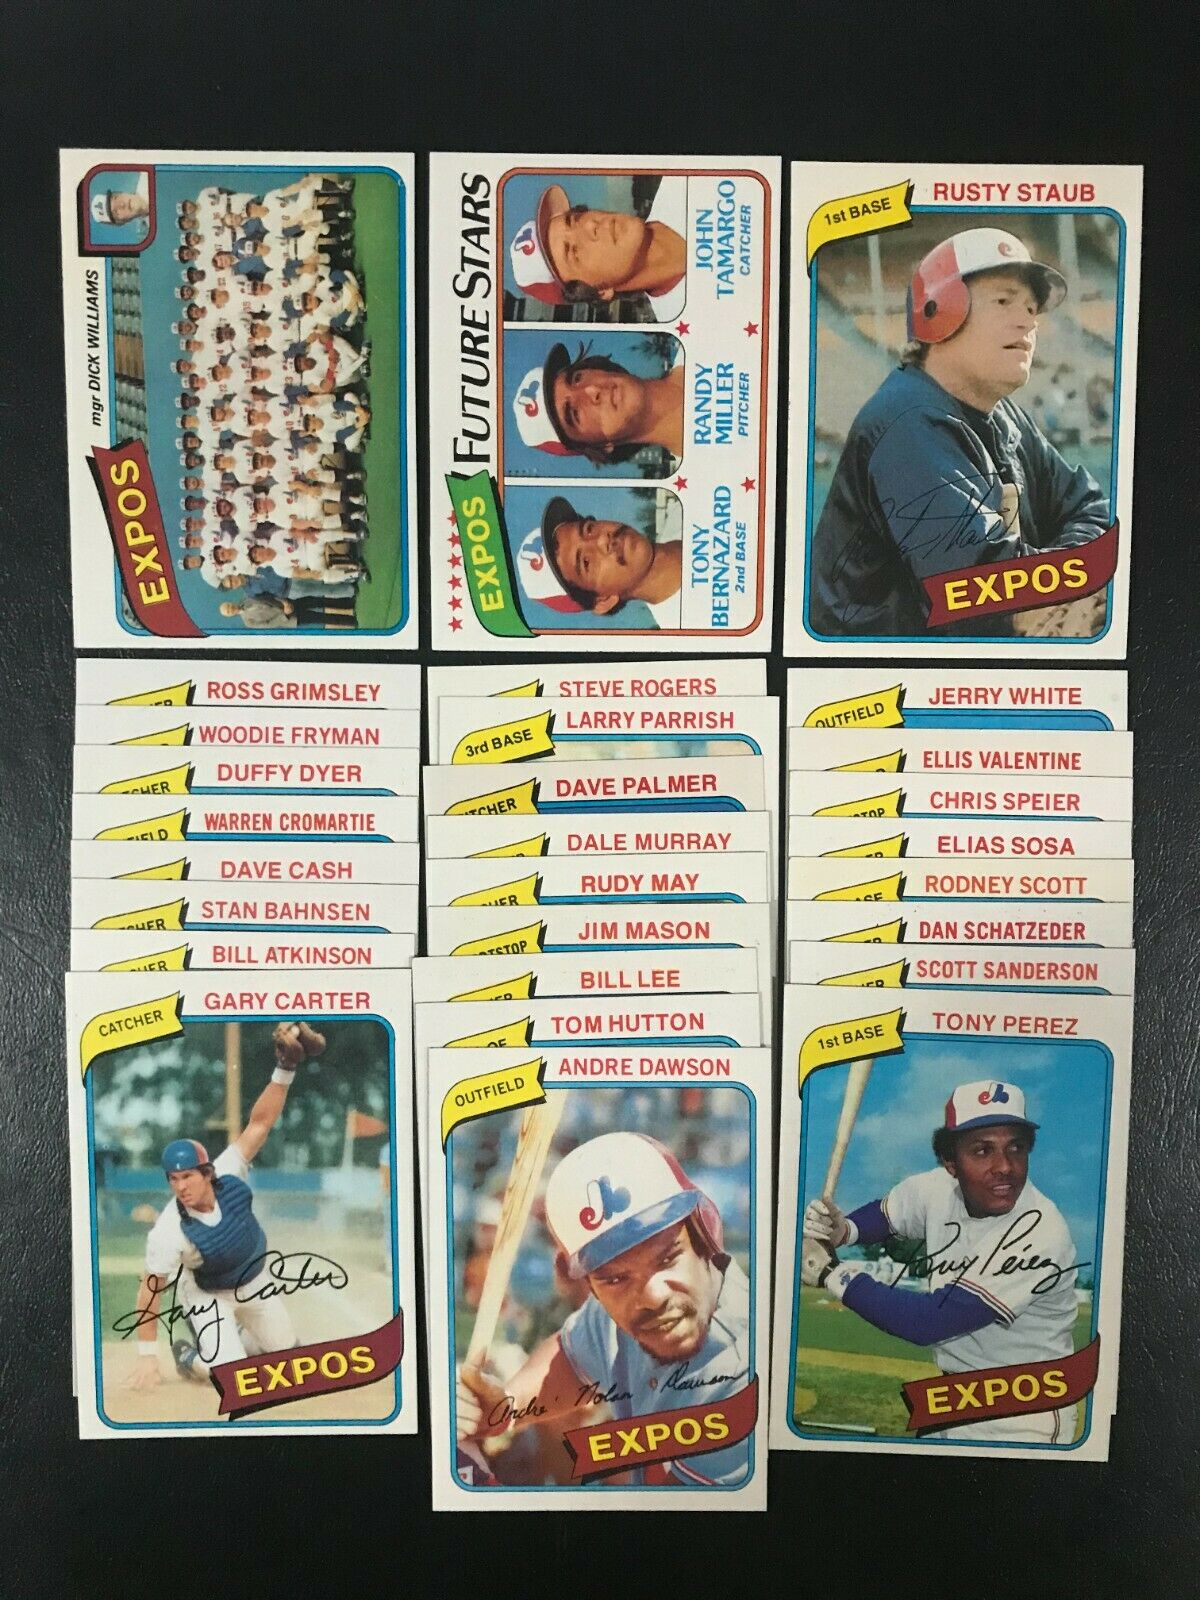  1980 Topps #567 Skip Lockwood NM+++ New York Mets